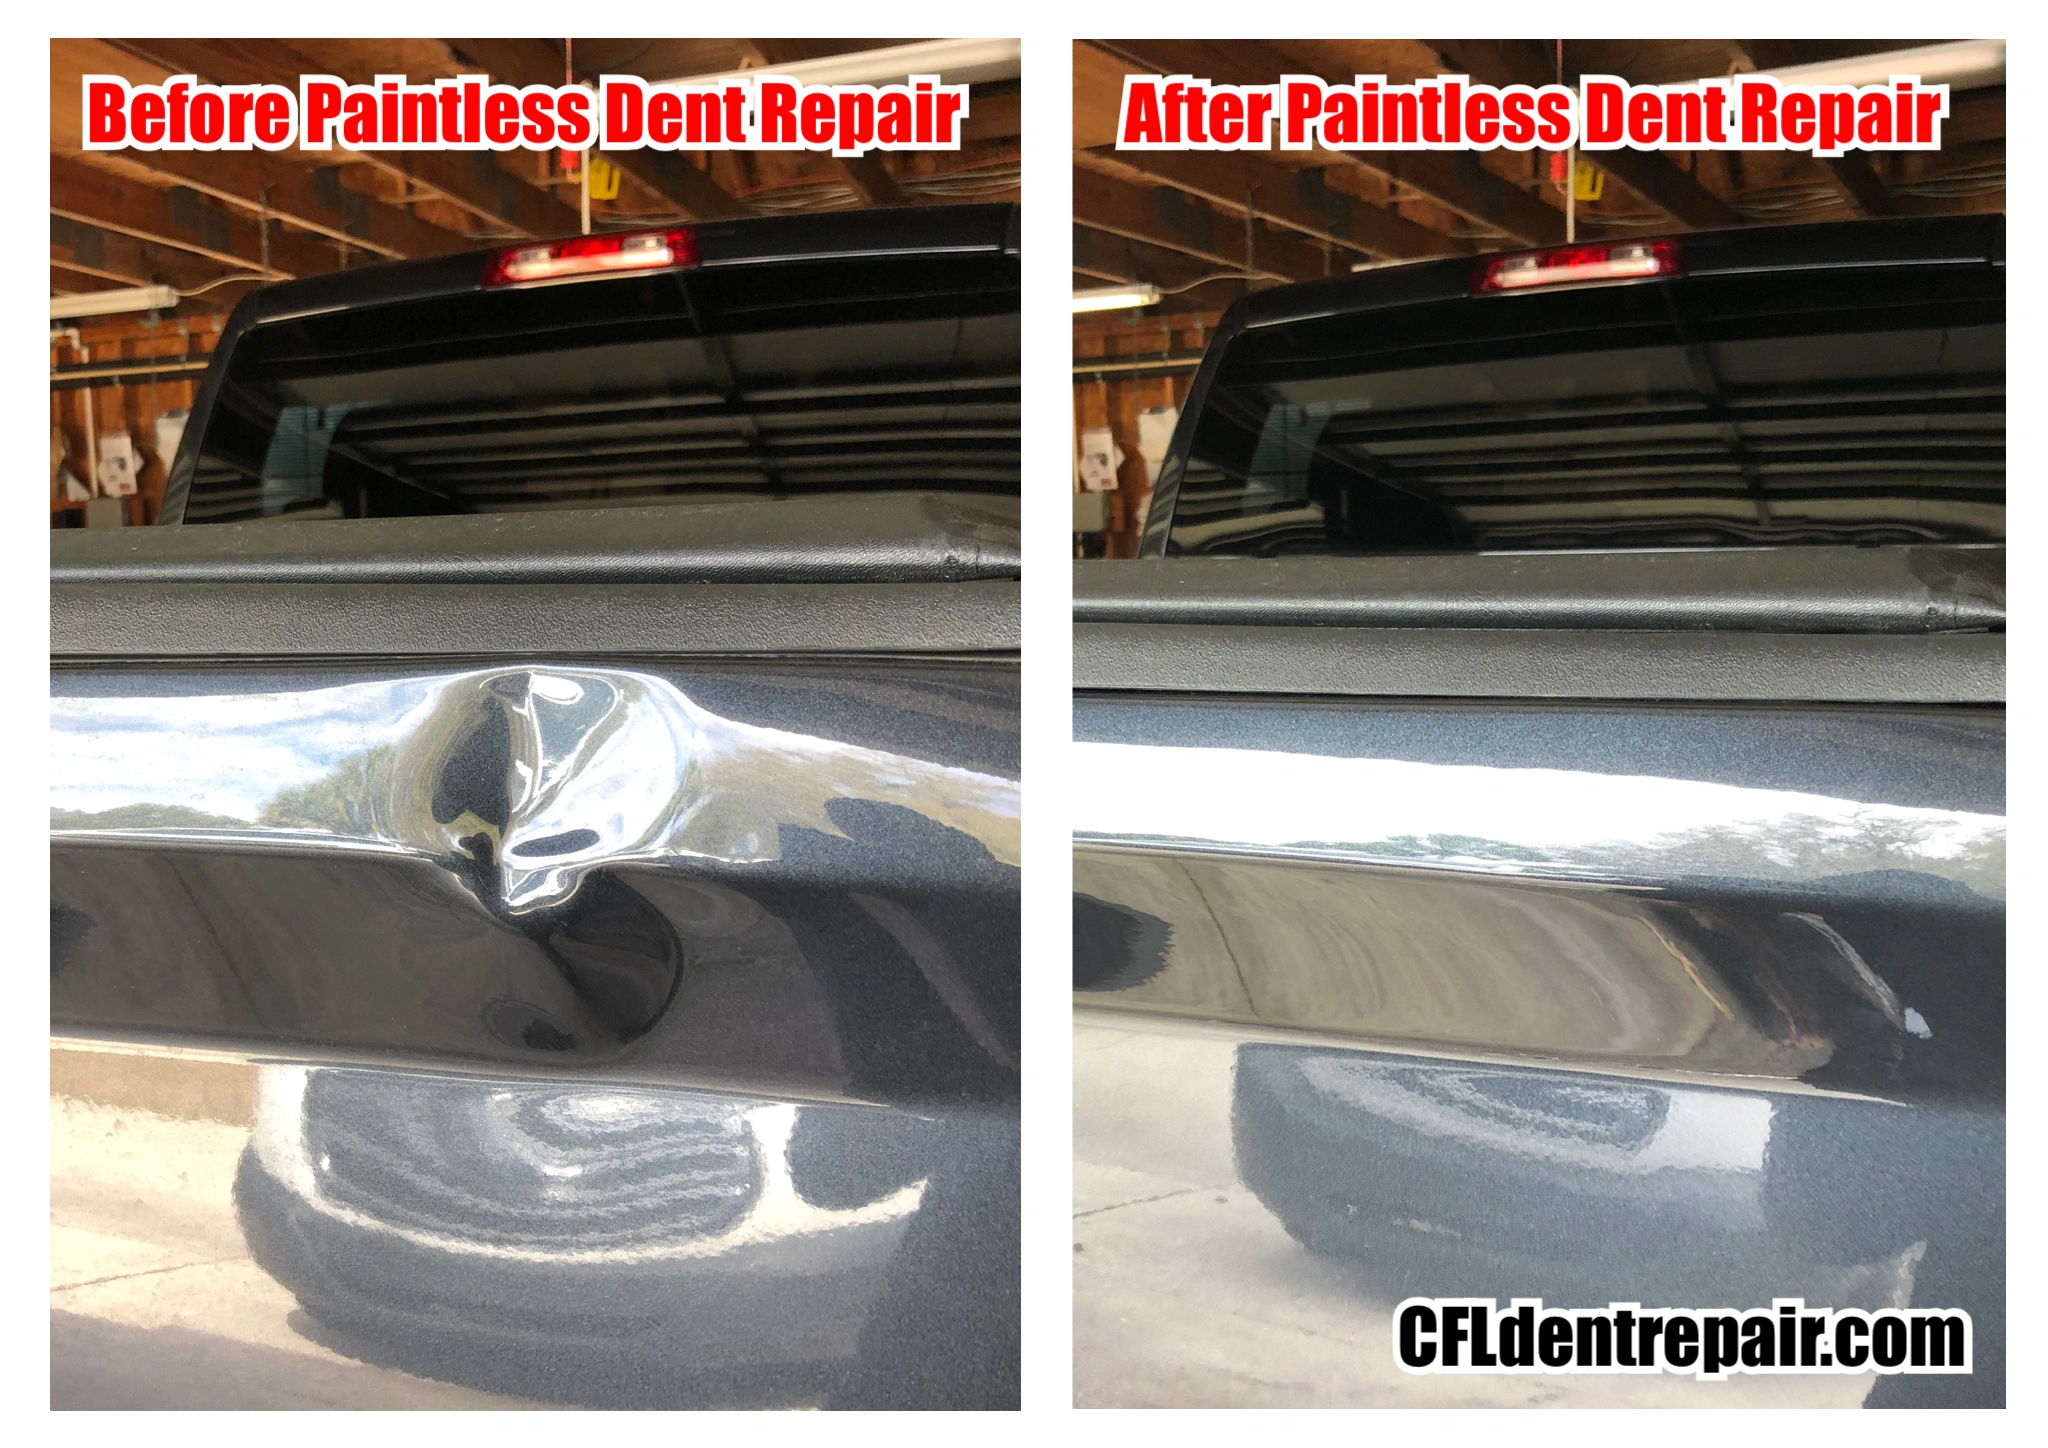 Central Florida Dent Repair Dodge Ram Paintless Dent Removal Mobile PDR Near Me Fix Car Sanford Lake